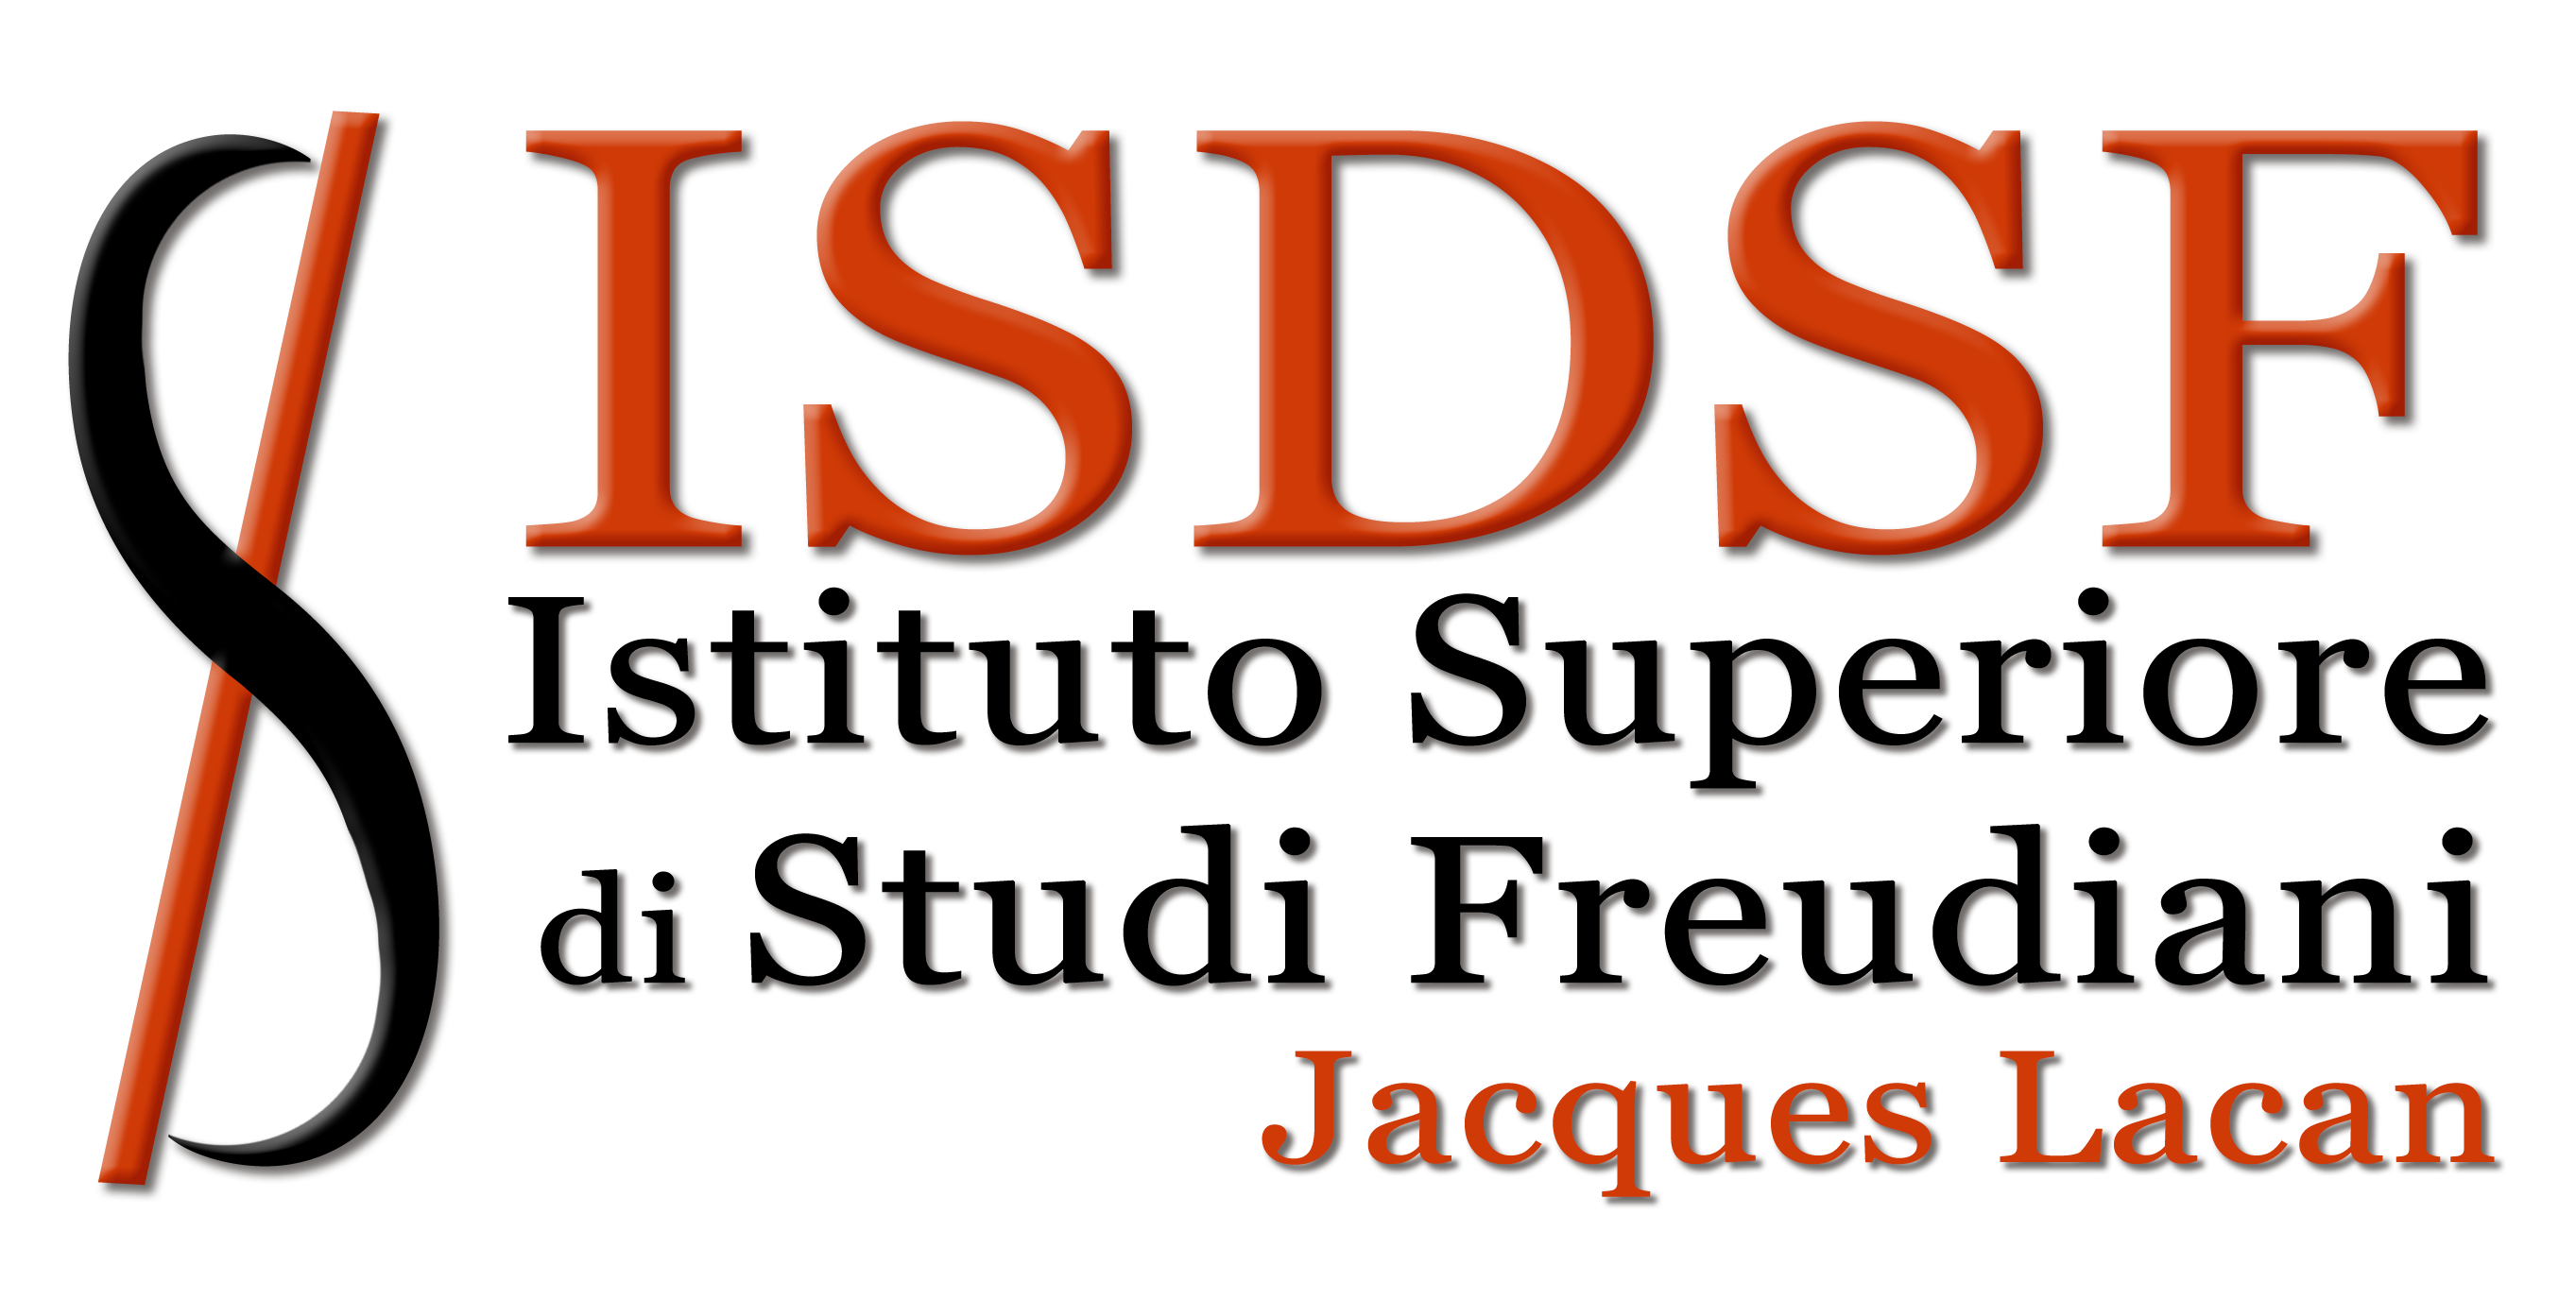 ISDSF – Istituto Superiore di Studi freudiani